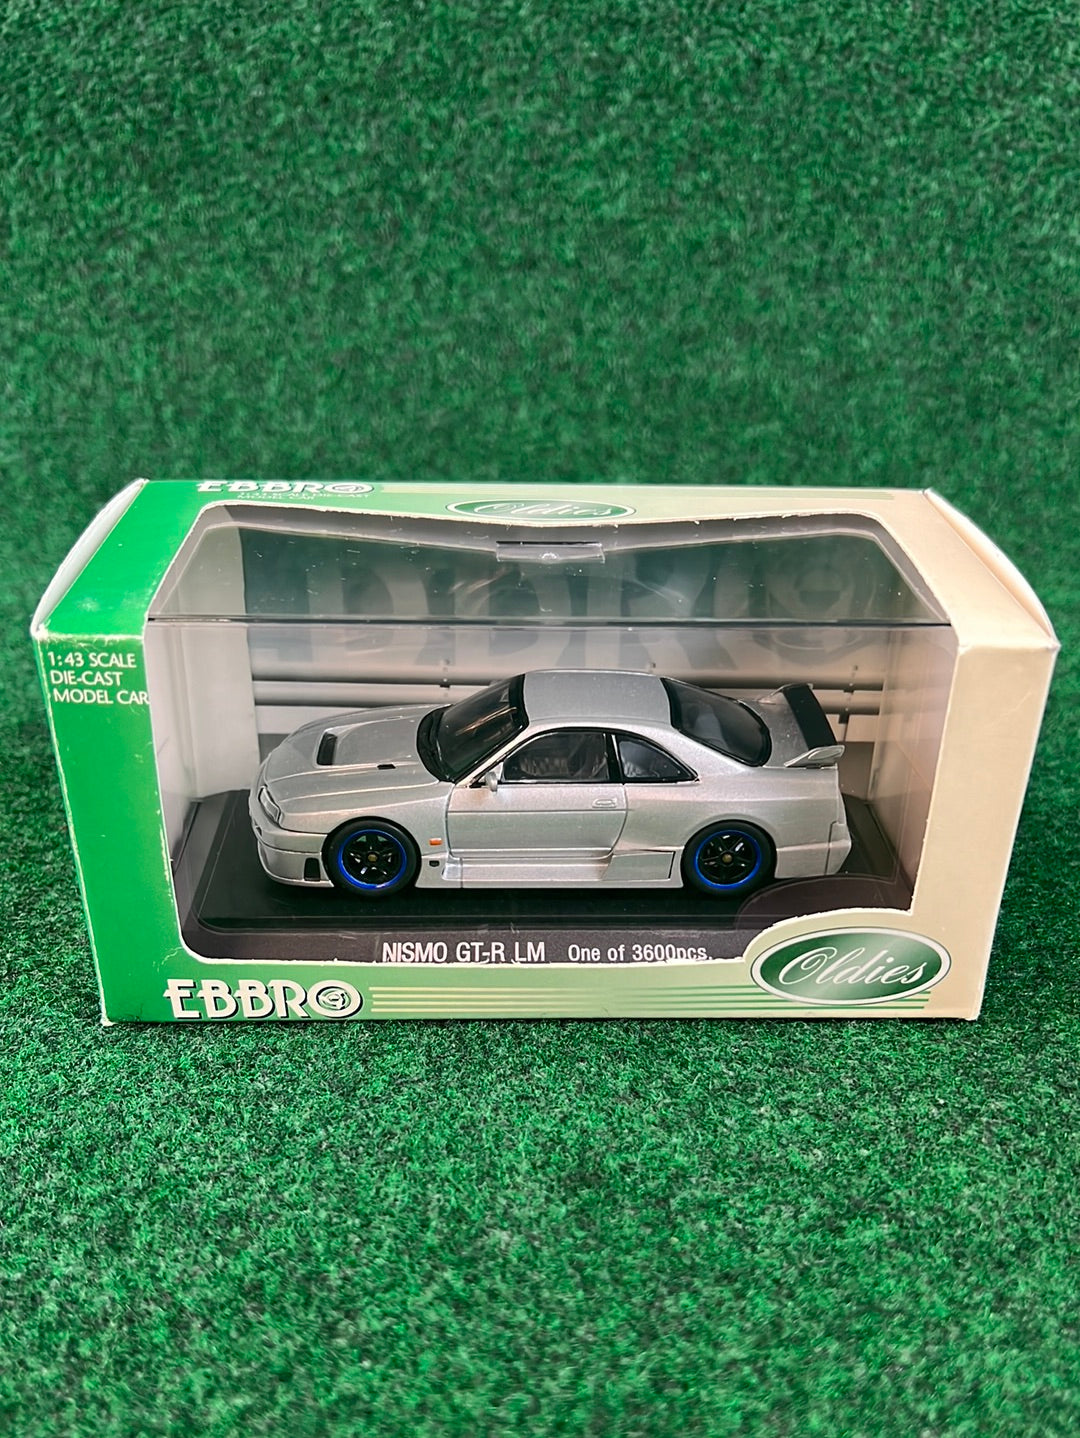 EBBRO Oldies Nissan Skyline R33 GTR LM 1/43 Scale Diecast